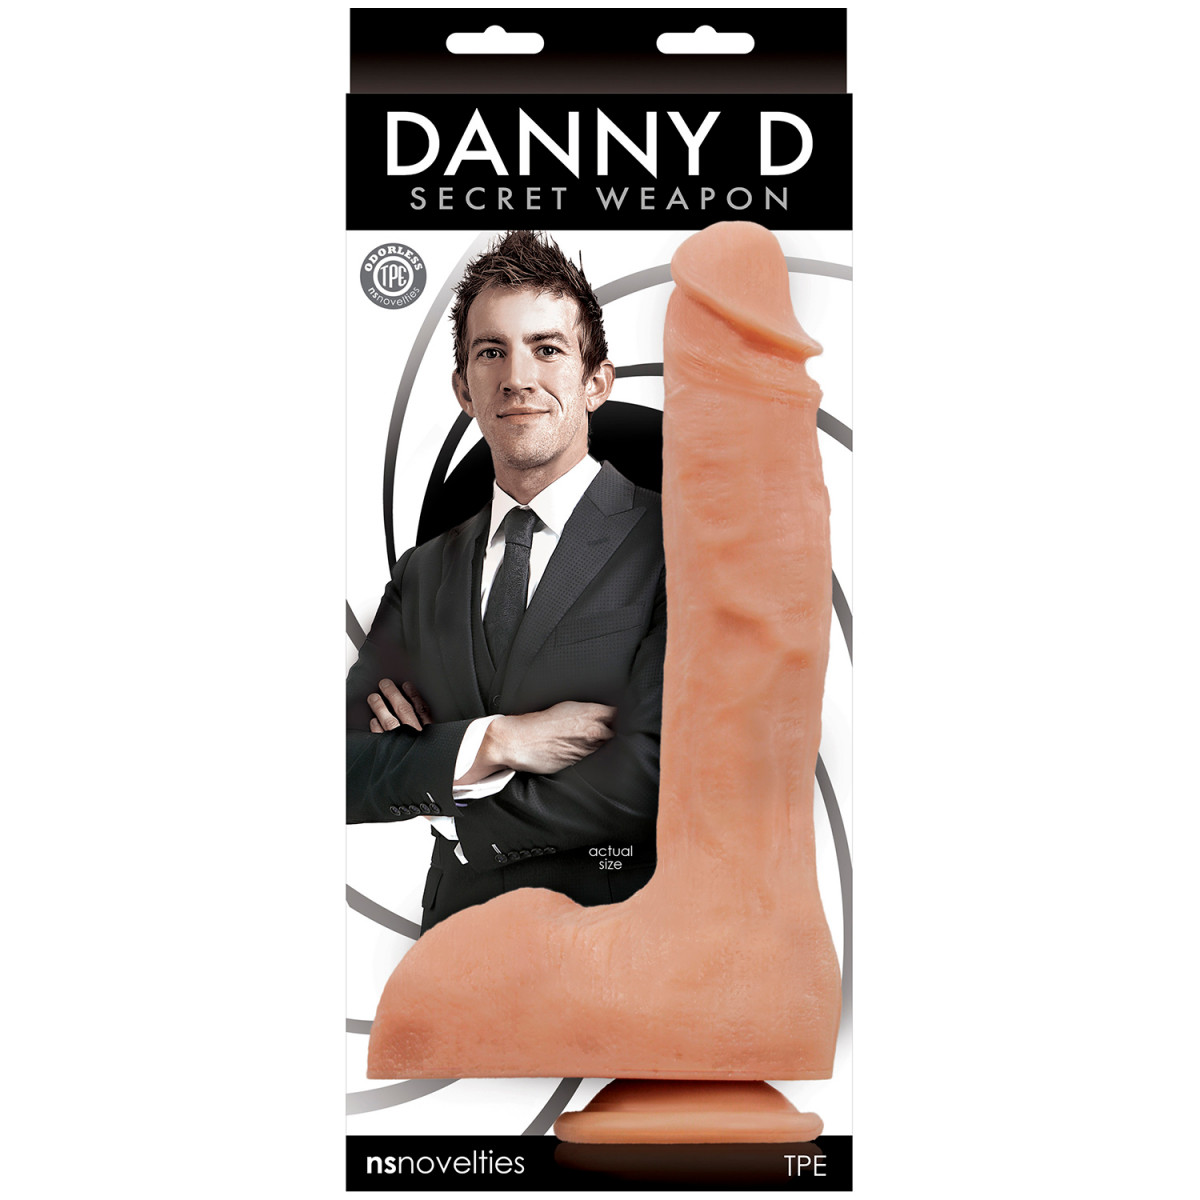 How Big Is Danny D's Cock